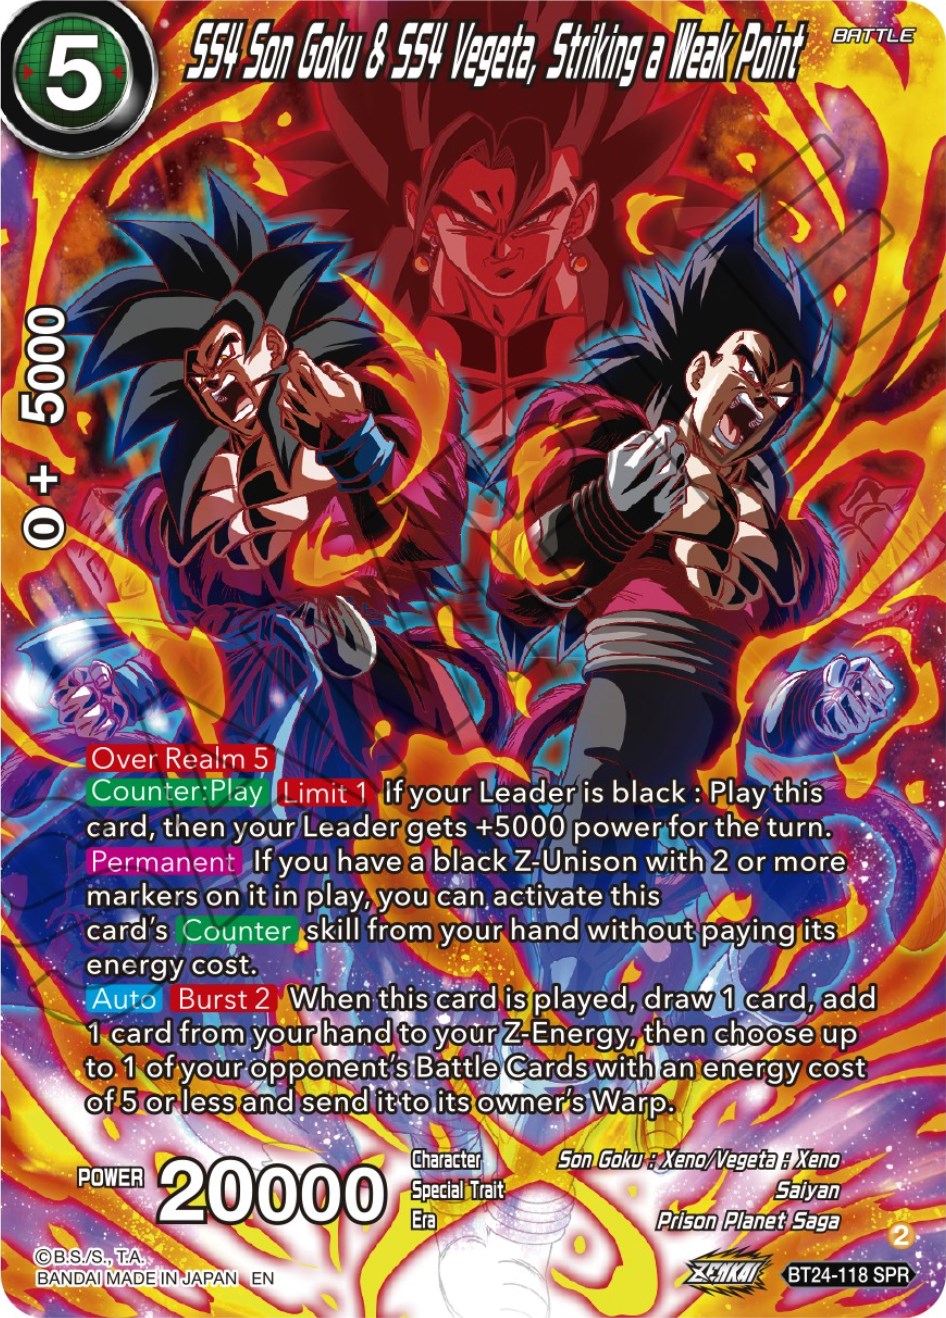 SS4 Son Goku & SS4 Vegeta, Striking a Weak Point (SPR) (BT24-118) [Beyond Generations] | Pegasus Games WI